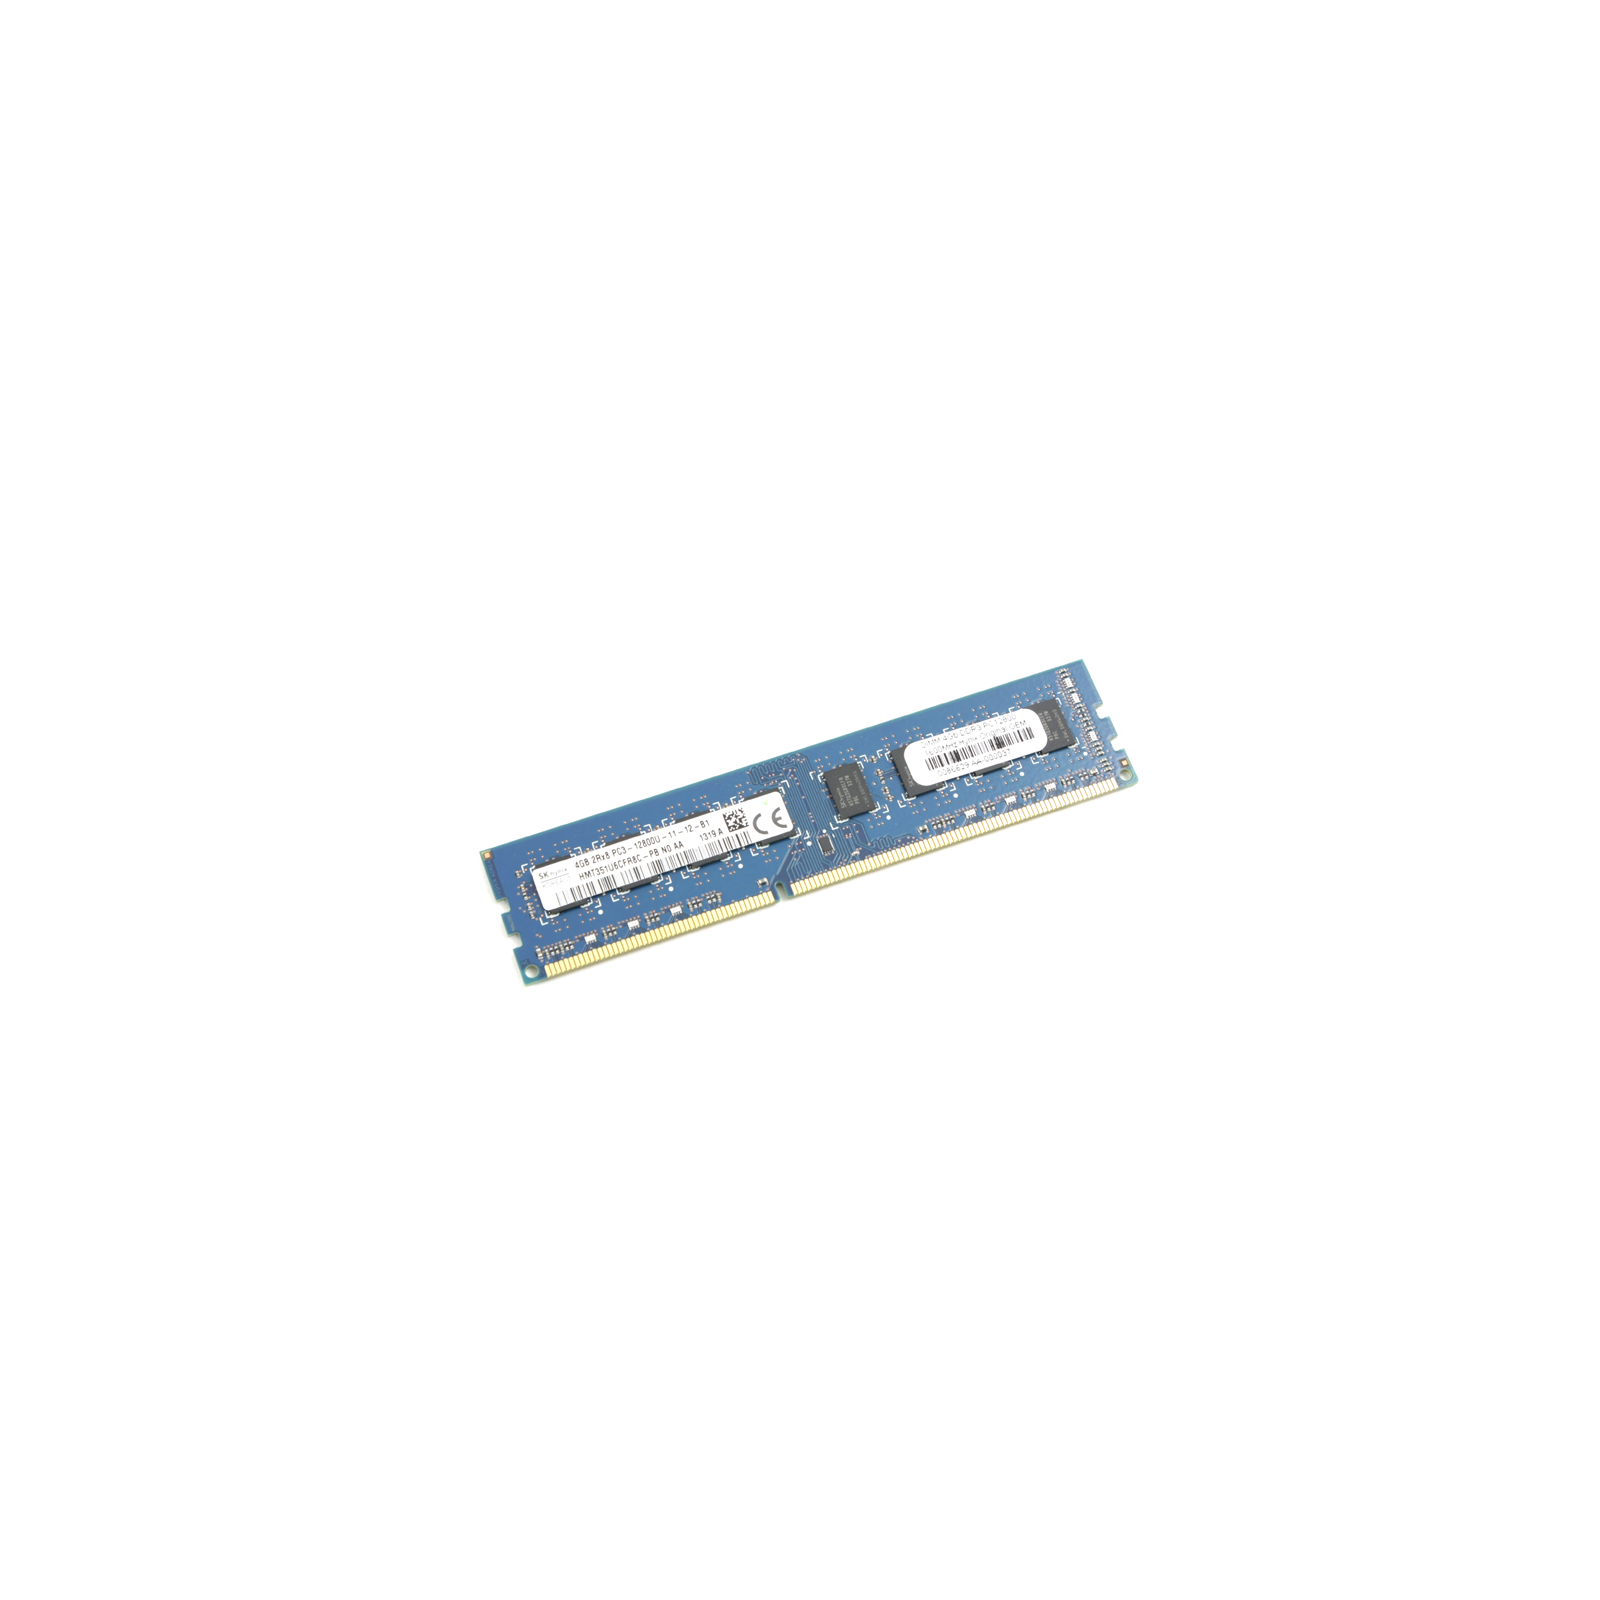 Модуль памяти для компьютера DDR3 4GB 1333 MHz Hynix (H5TQ2G83 / H5TQ4G43MFR / H5TС4G83BFR)